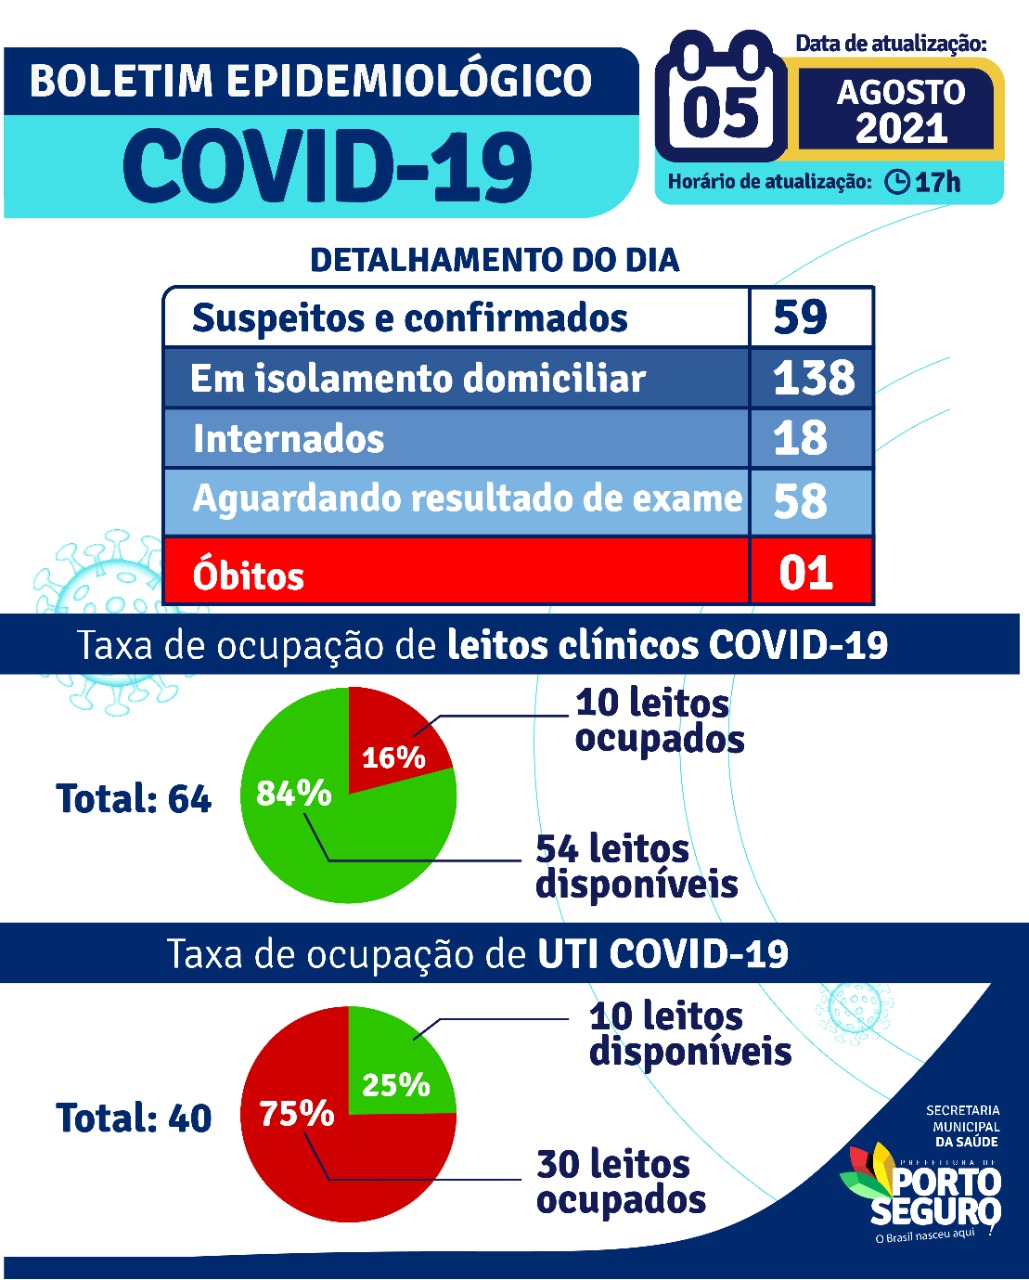 Porto Seguro: Boletim Epidemiológico Covid-19 (05 de agosto) 52